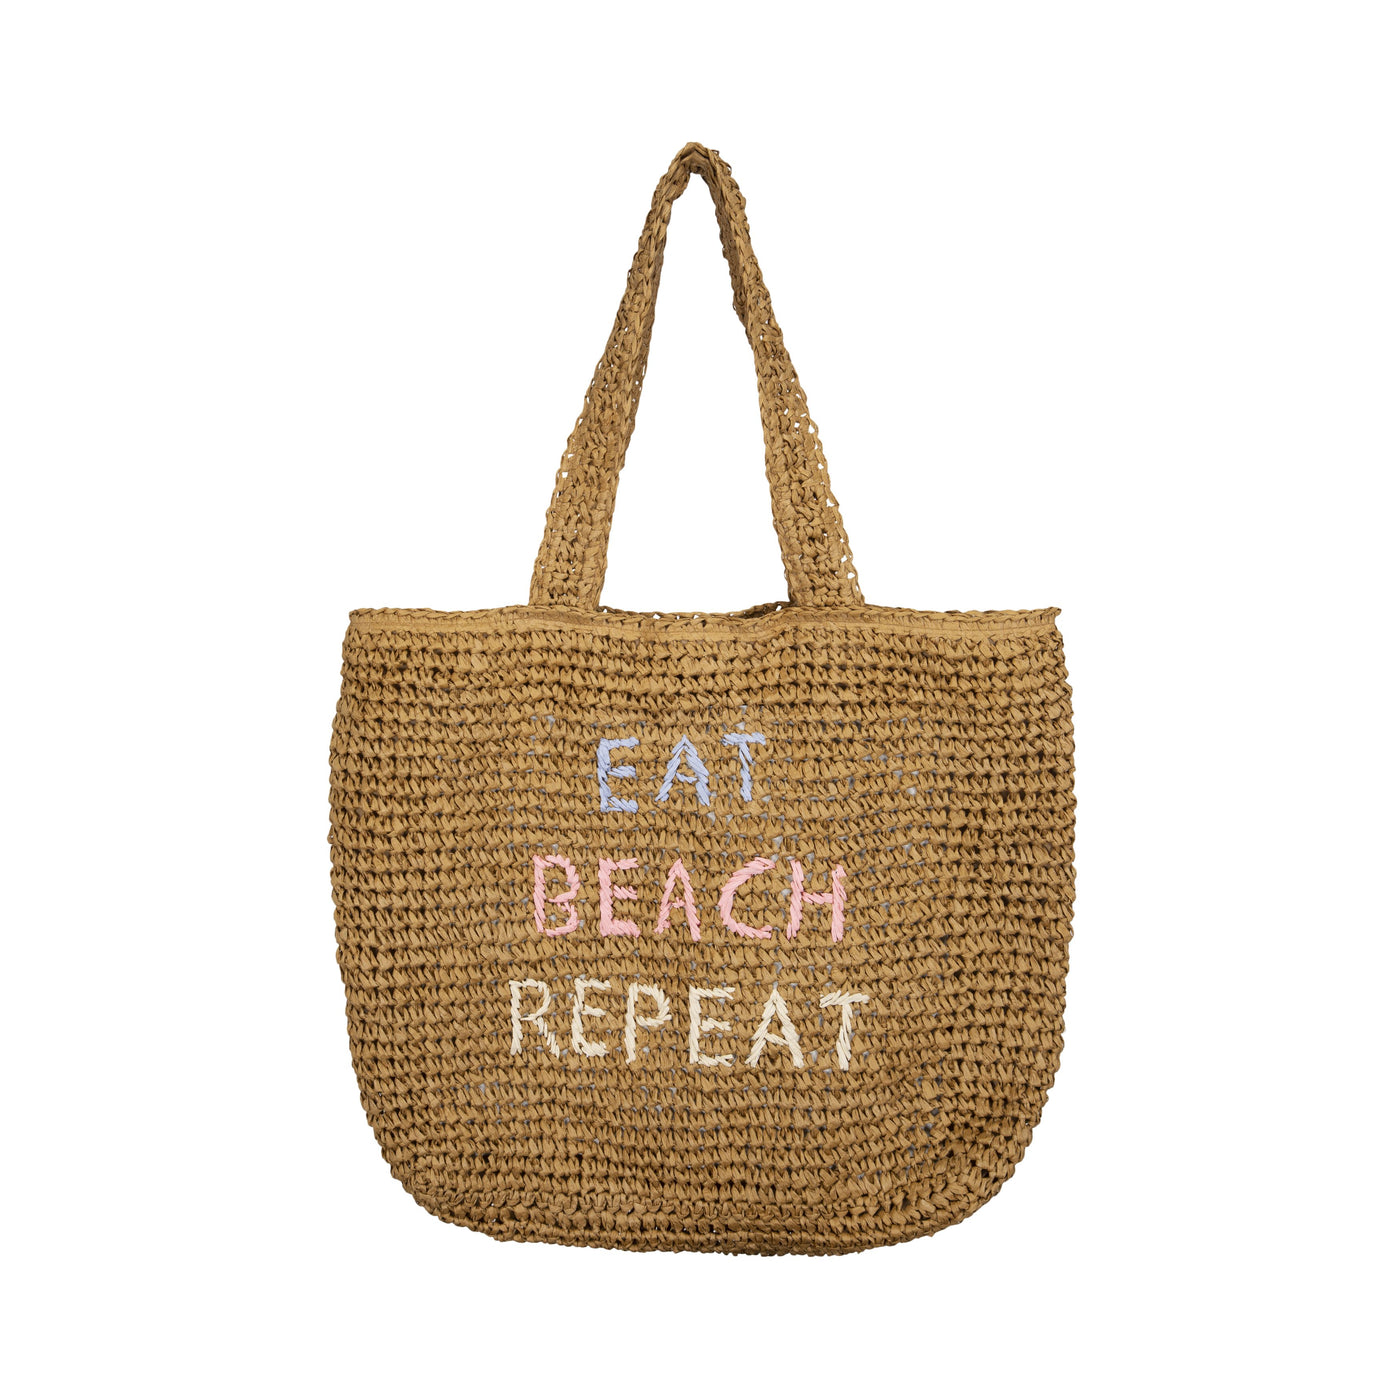 Eat, beach, repeat - shopper